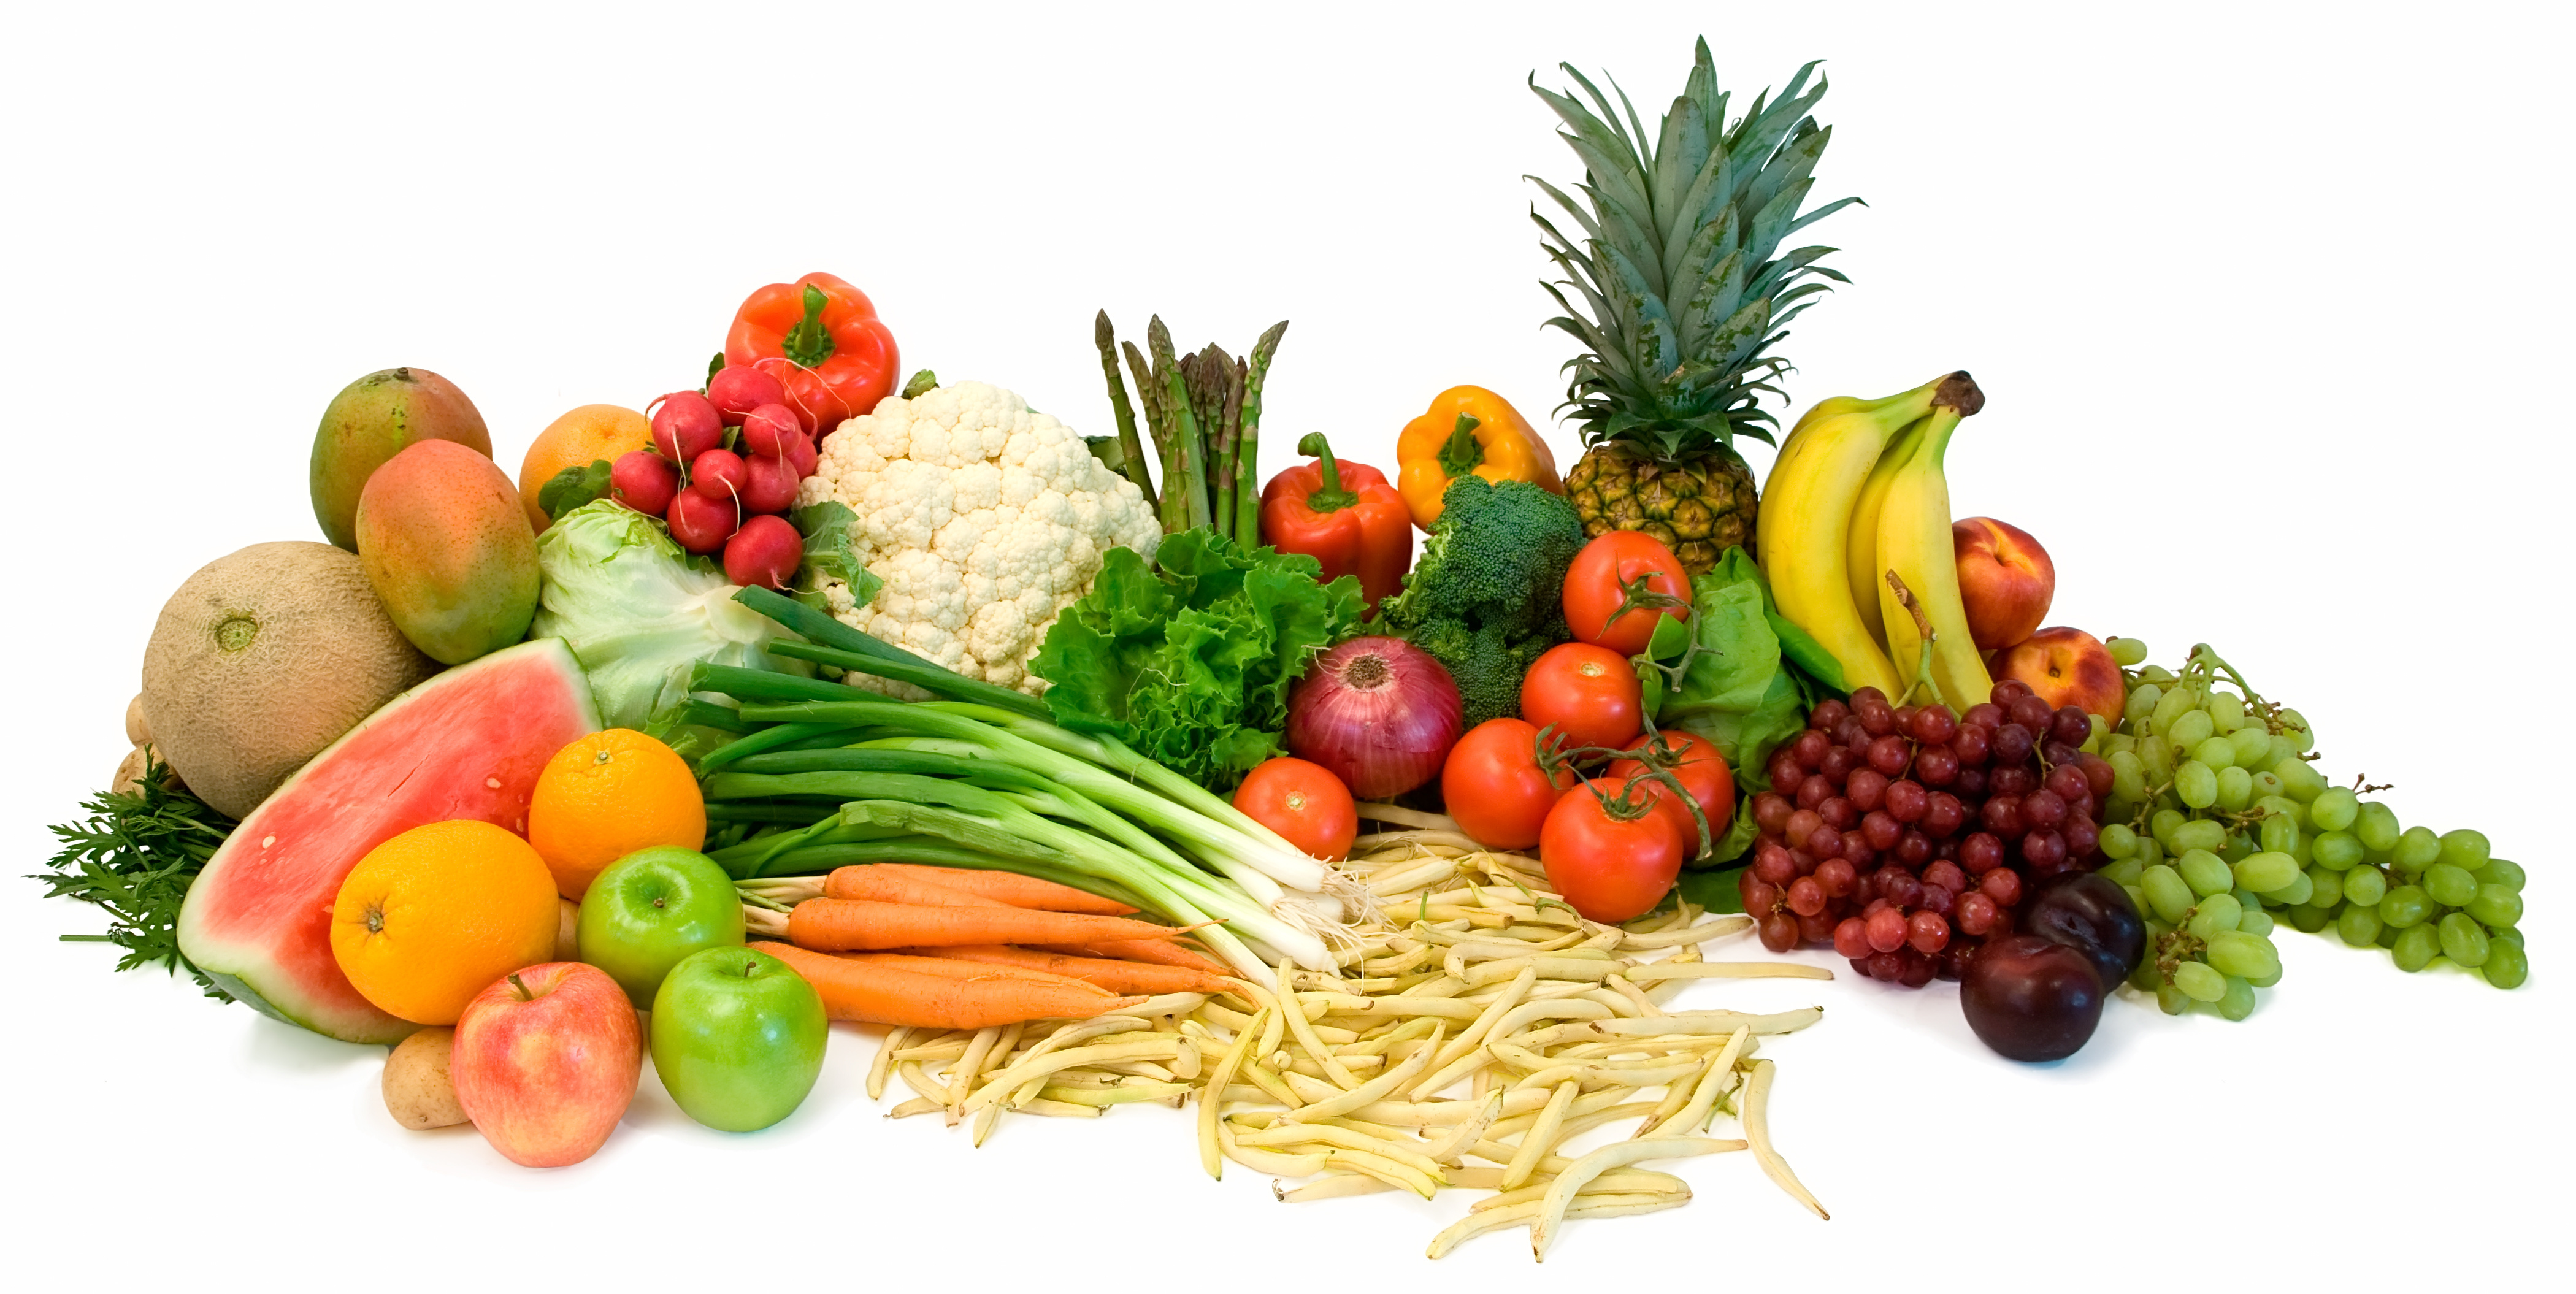 Veggies and Fruits | Alphas Produce, Inc.